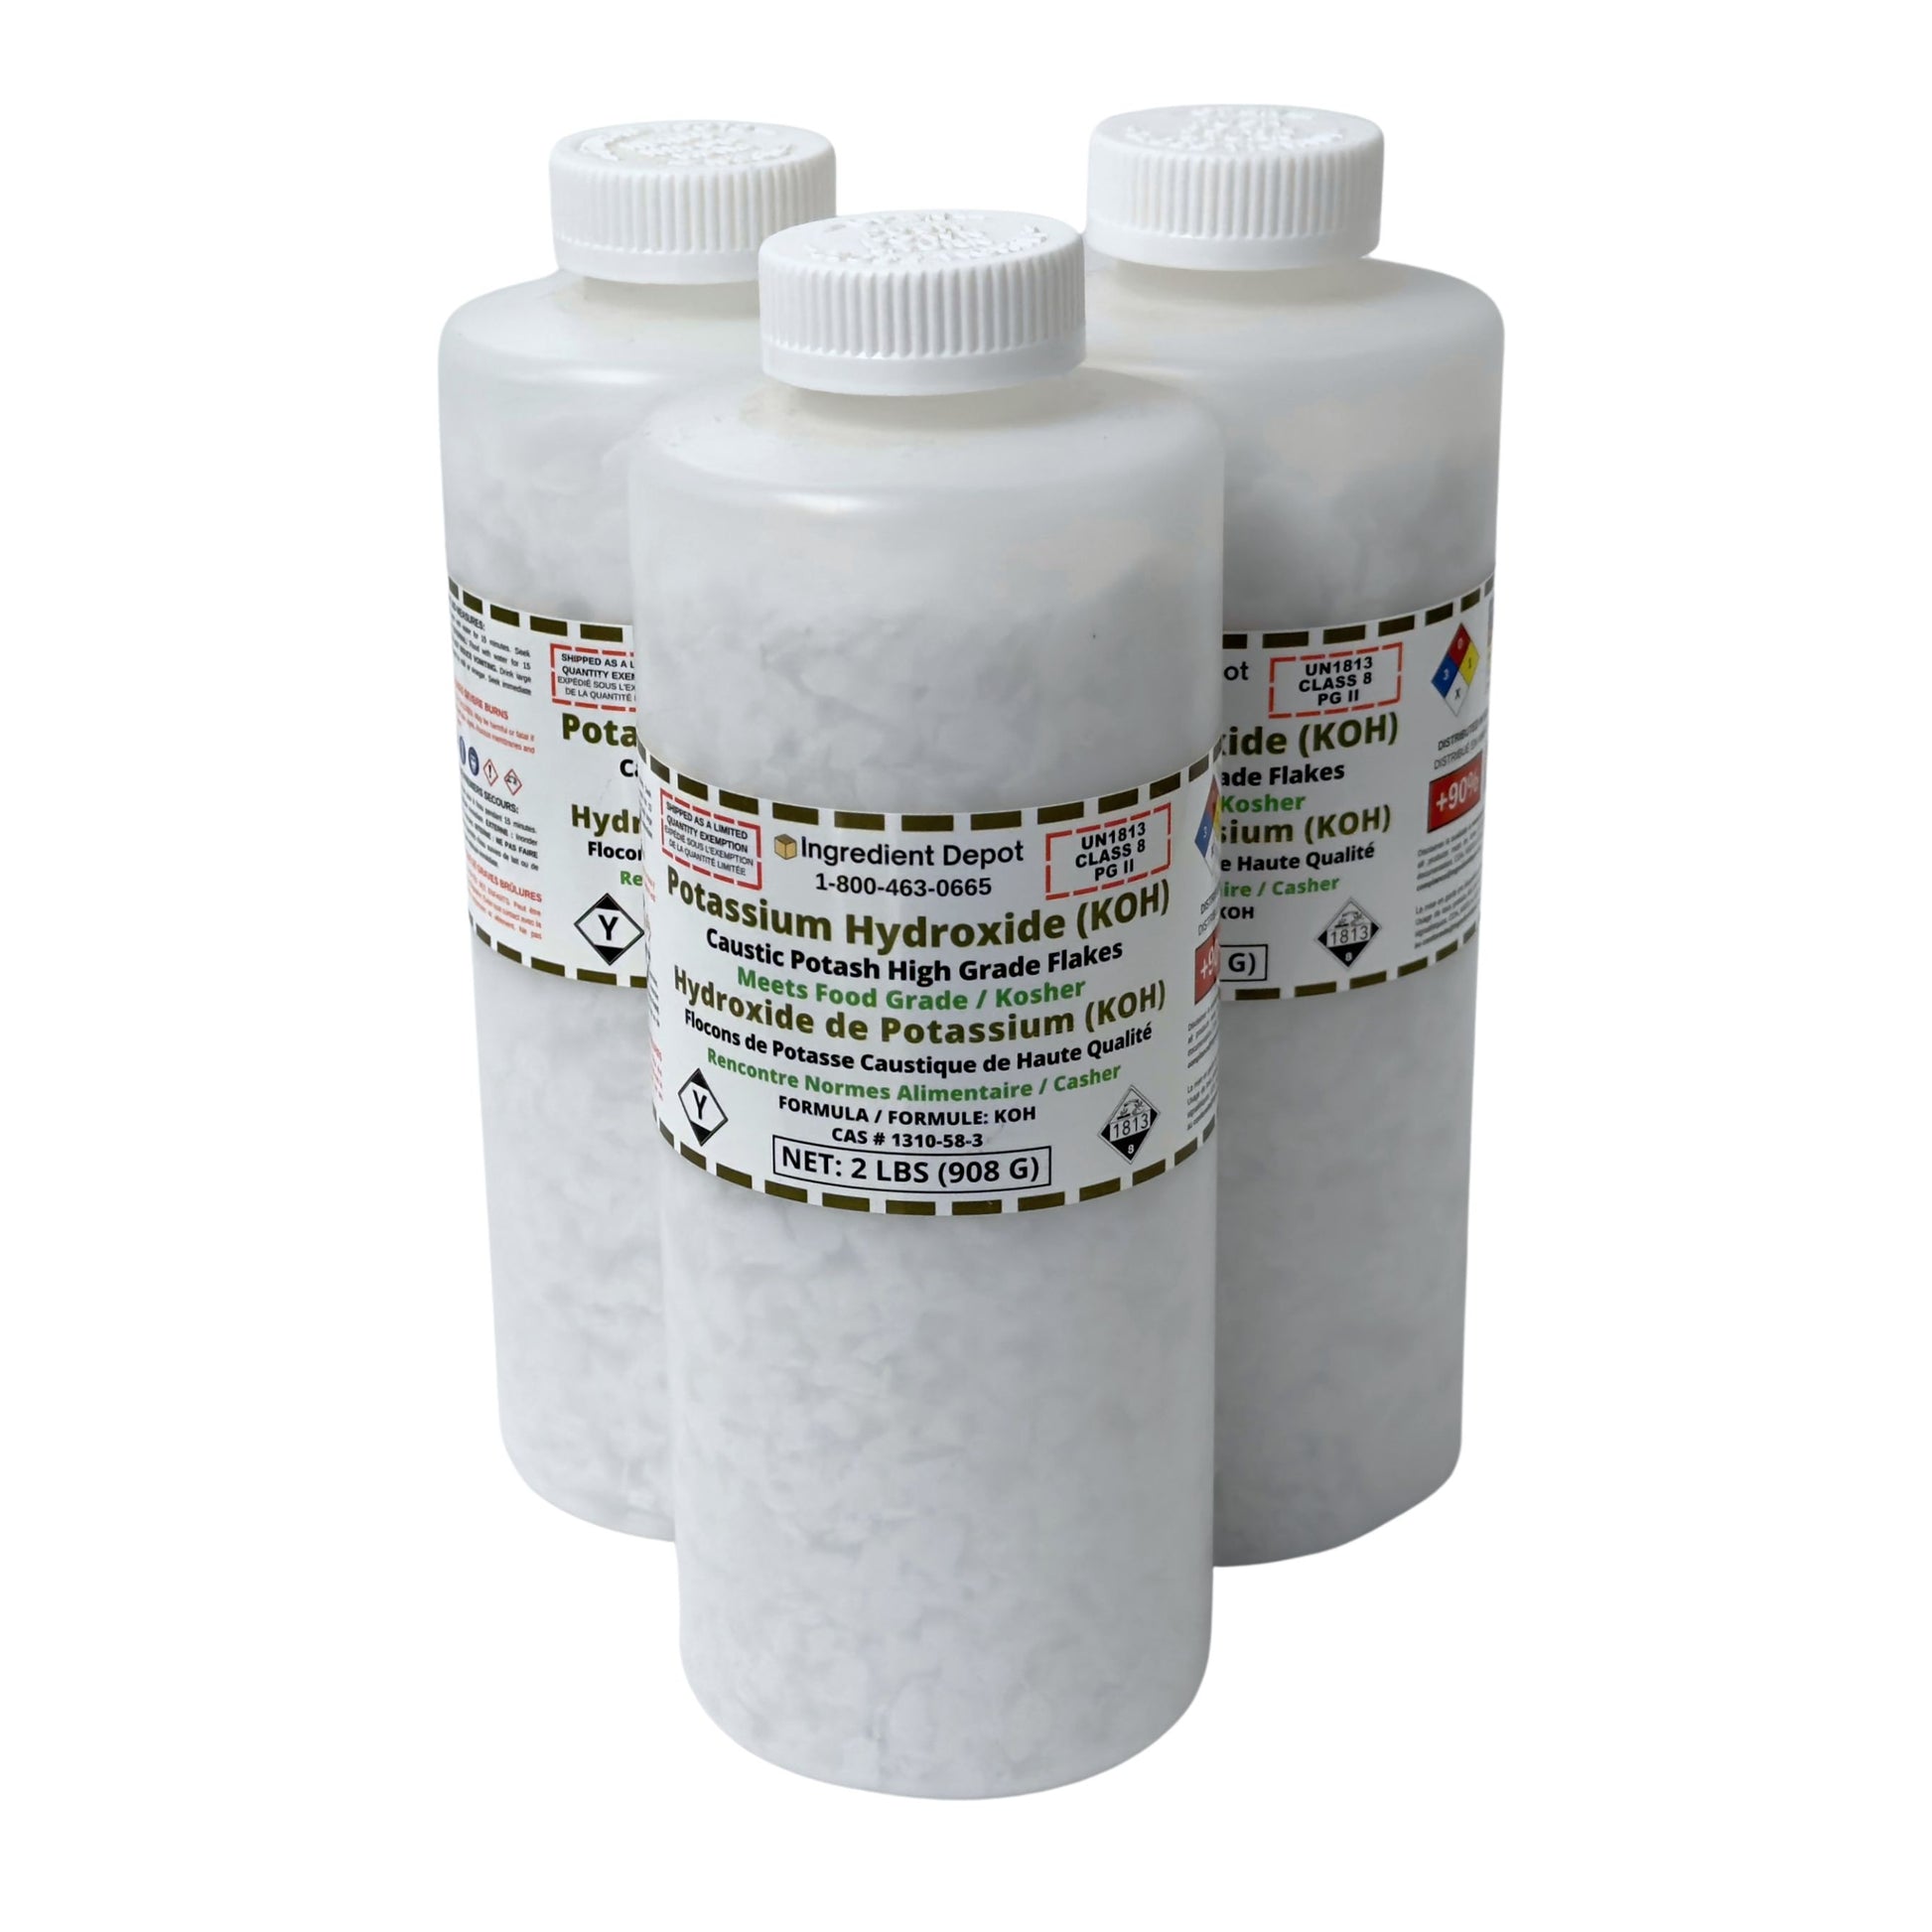 Potassium Hydroxide (KOH or Caustic Potash) Flakes 3 Jars